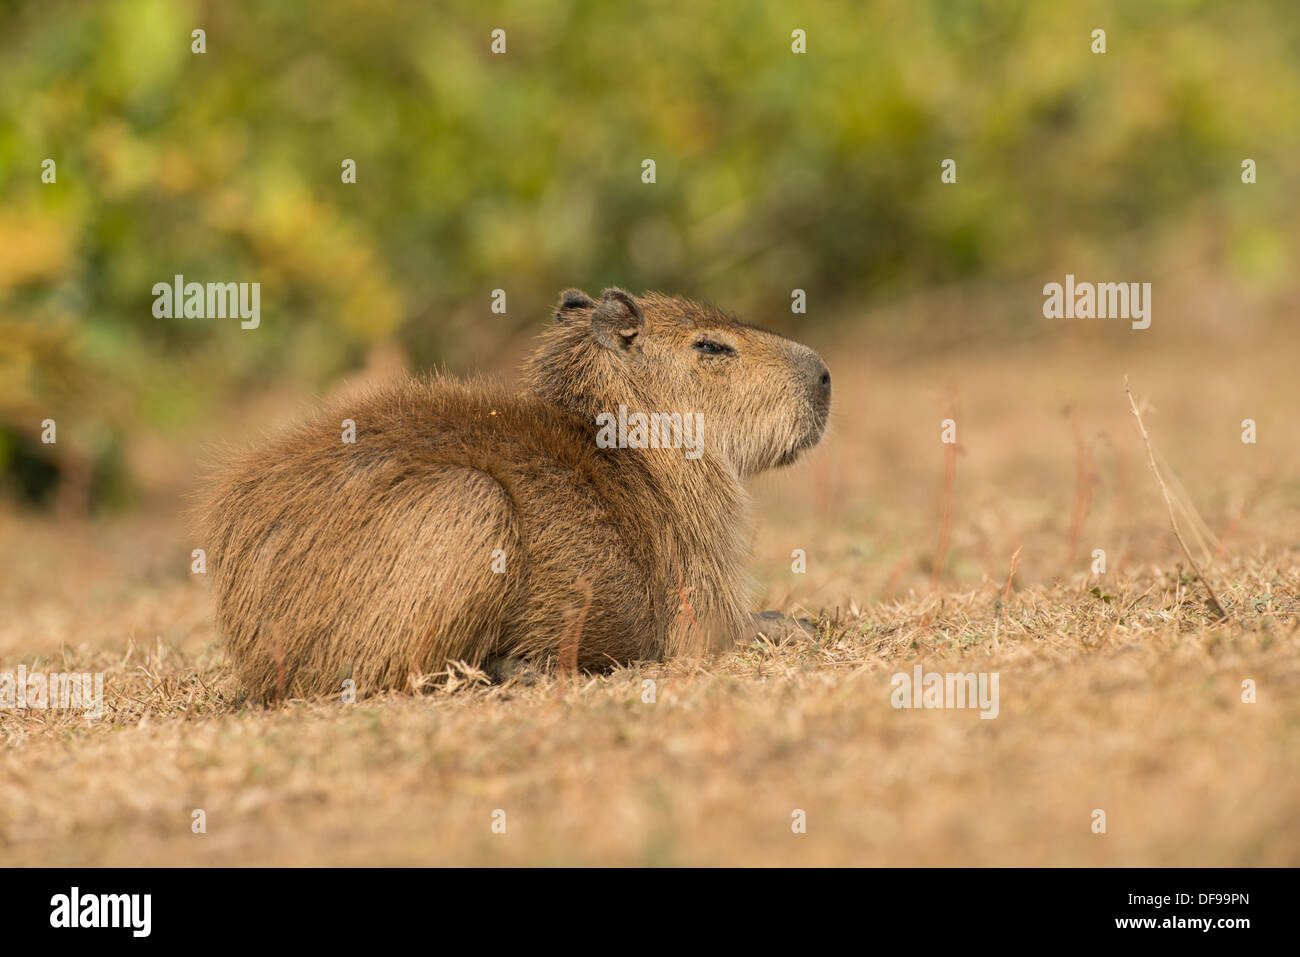 Stock Foto von ein Capybara ruhen, Pantanal, Brasilien. Stockfoto